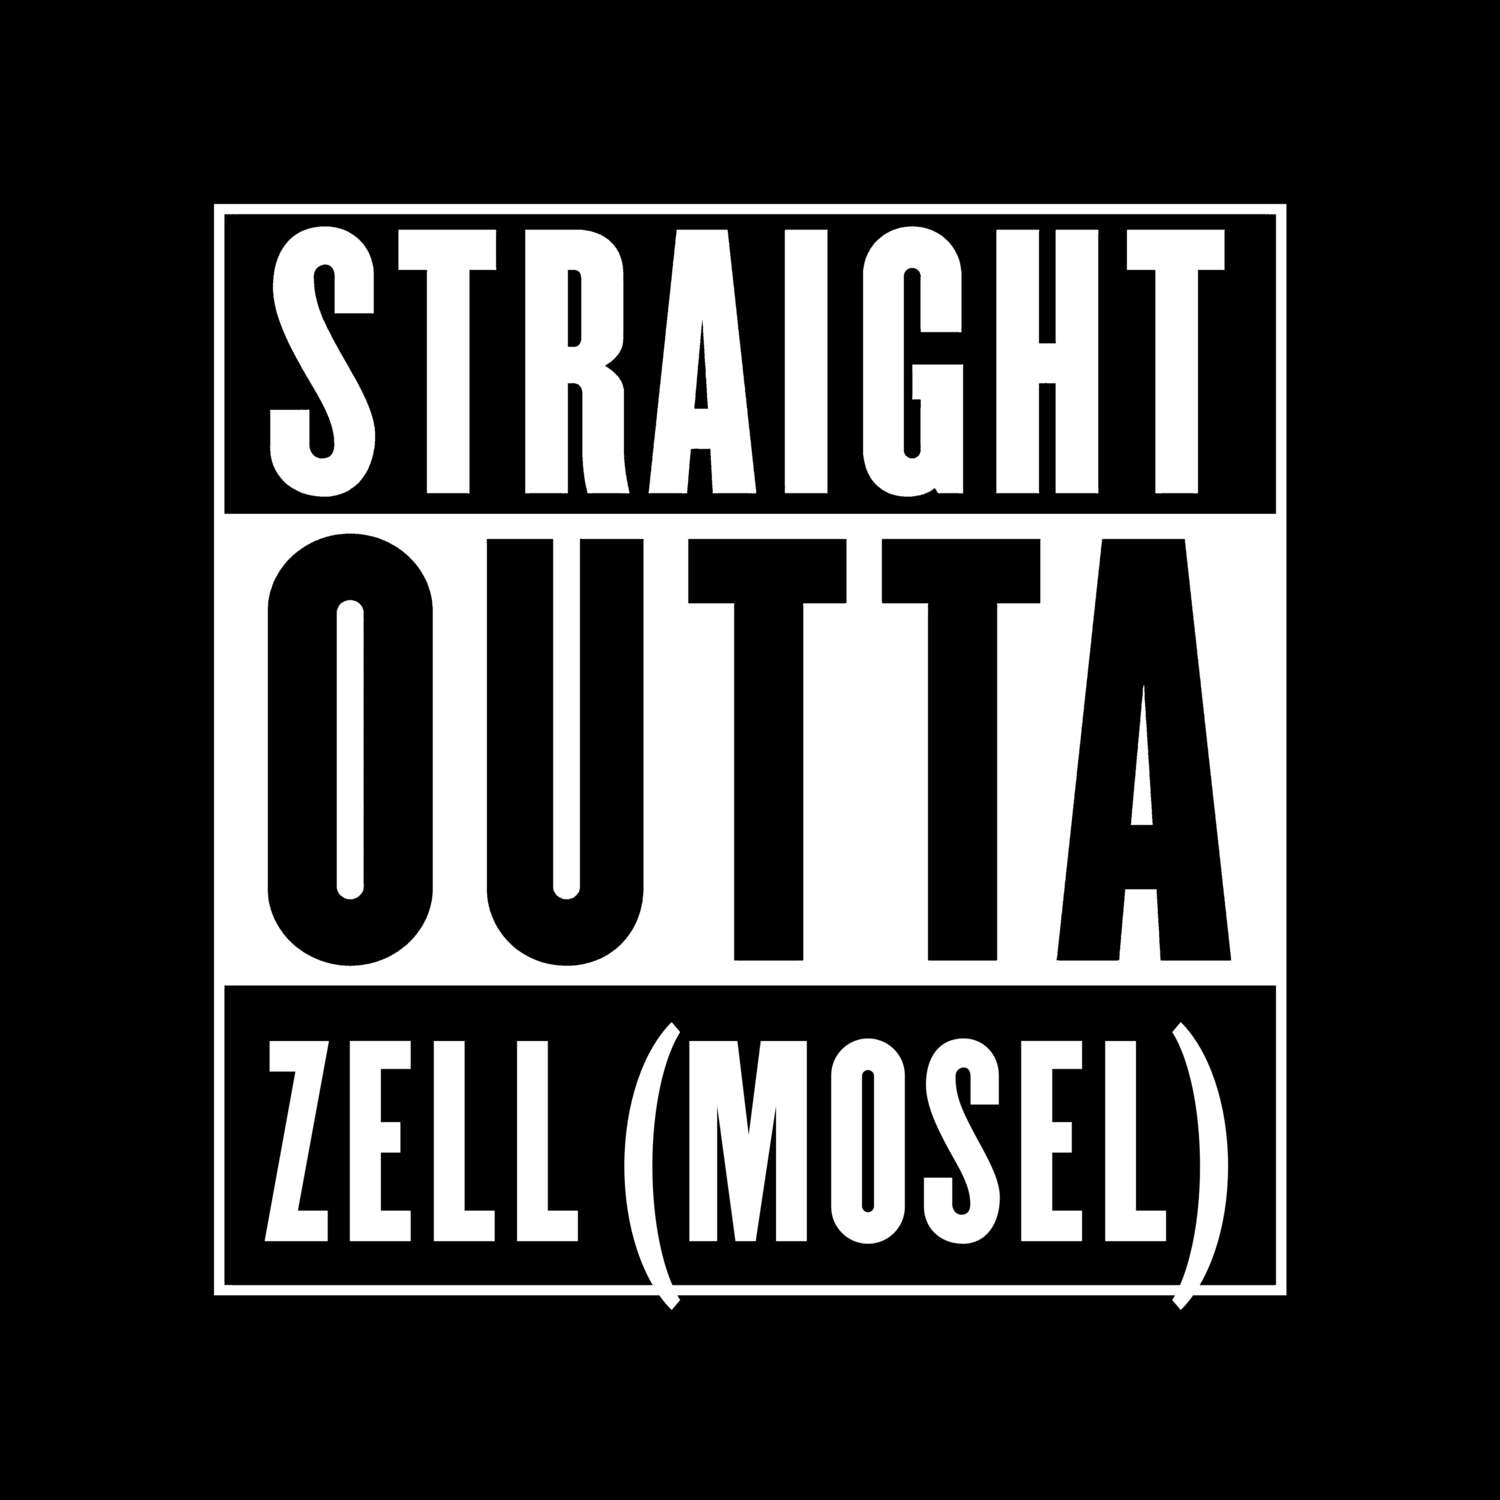 Zell (Mosel) T-Shirt »Straight Outta«